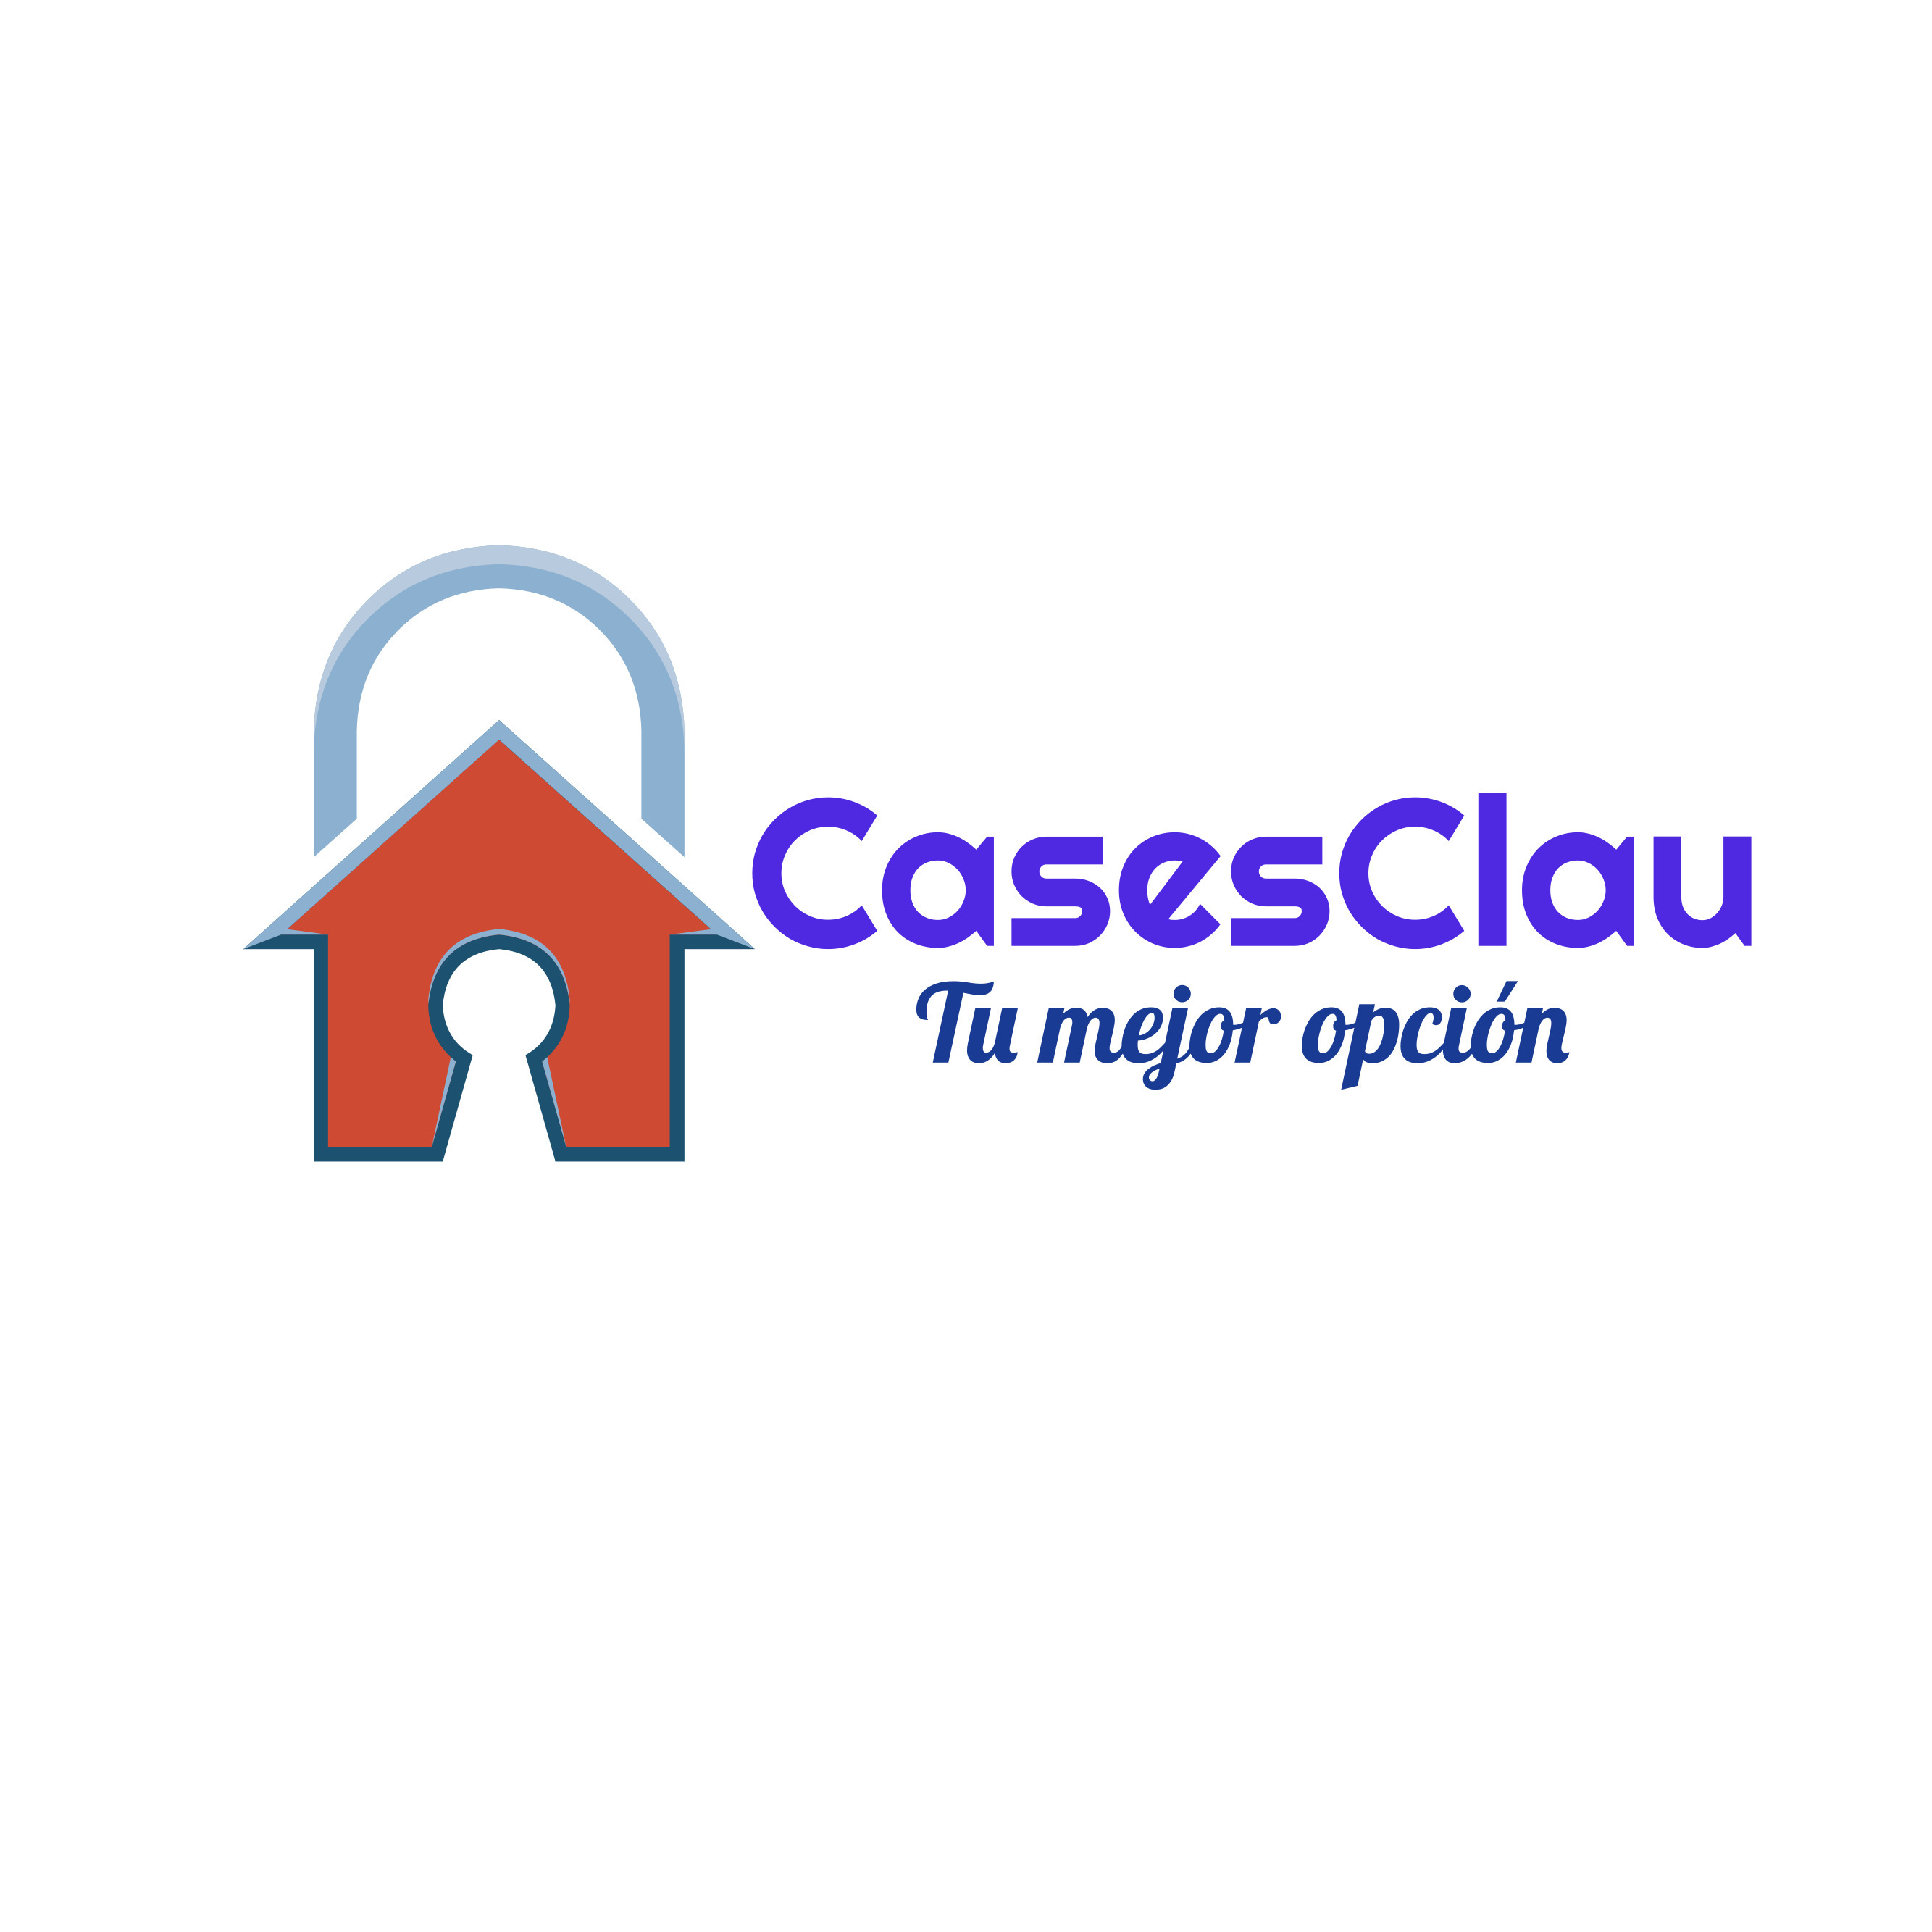 Casesclau Logo